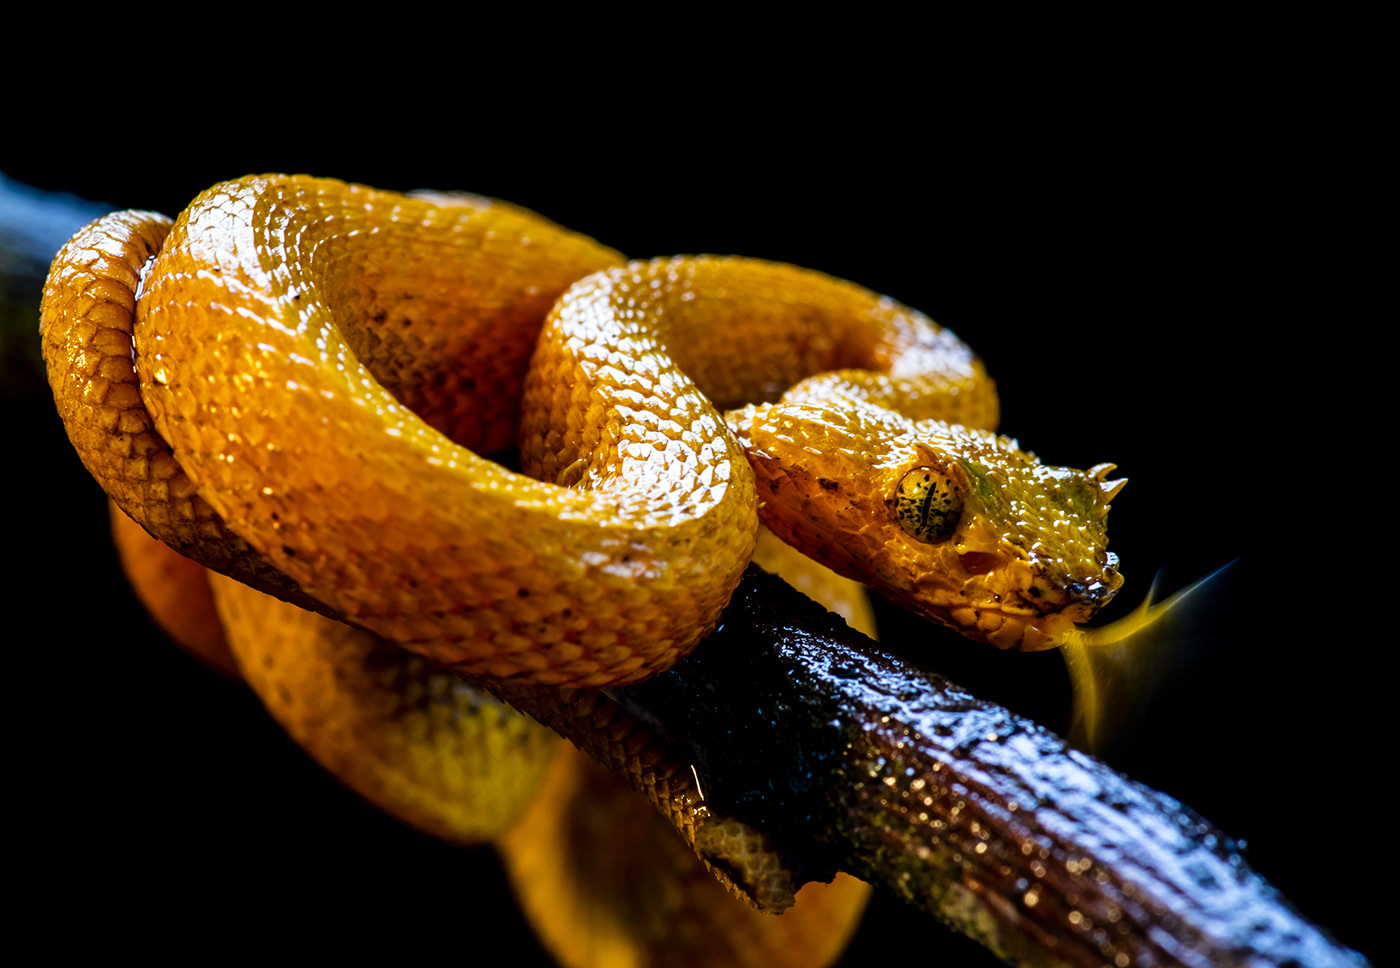 Adobe Portfolio snakes